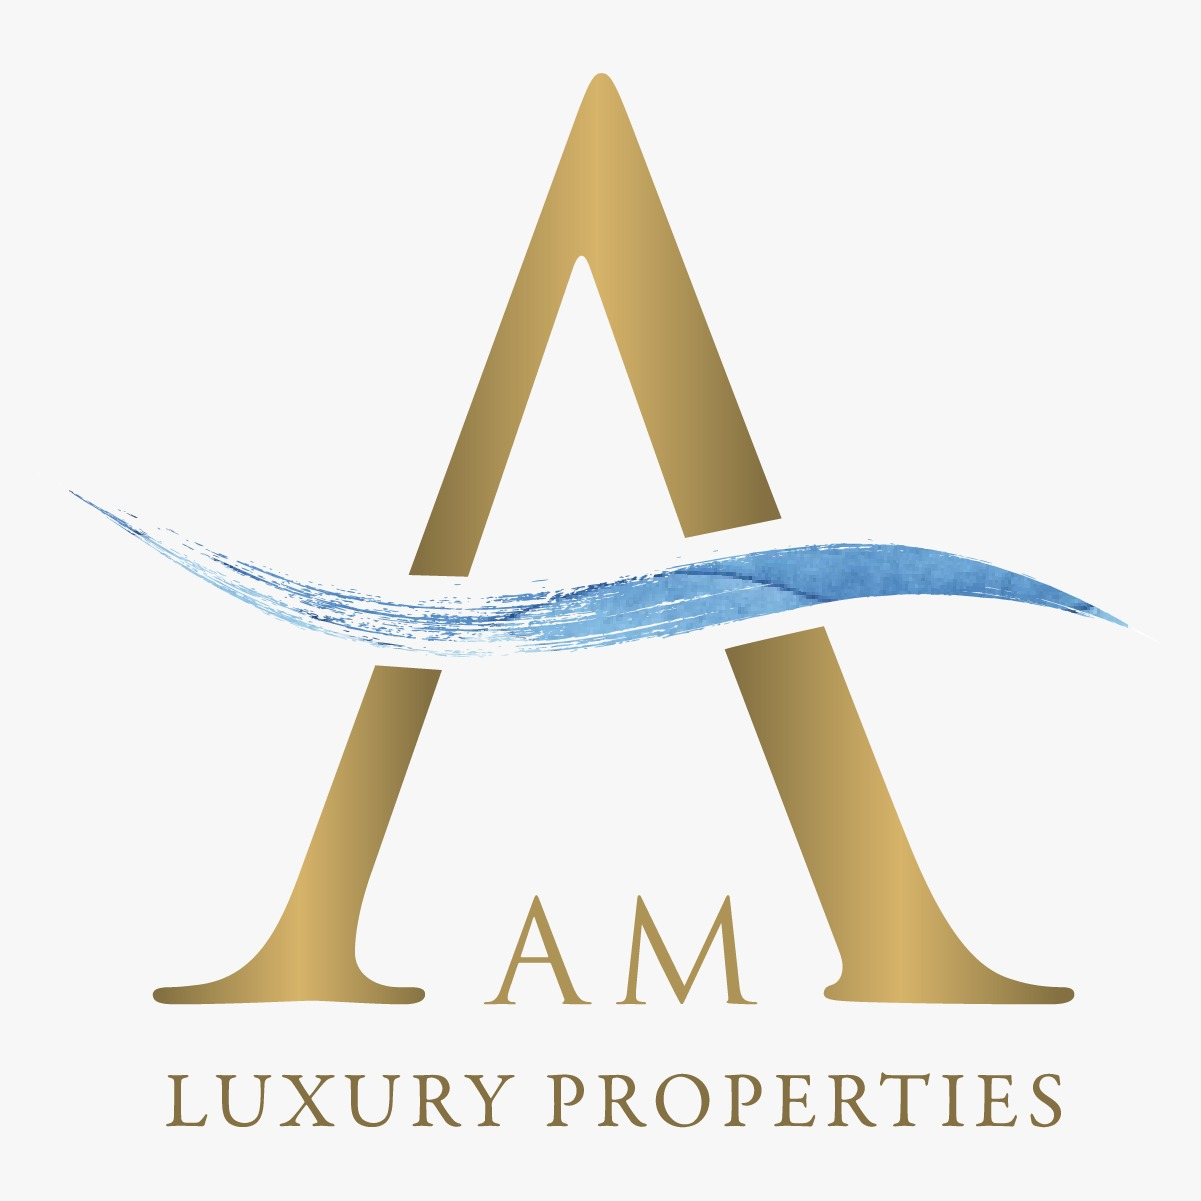 Luxury Real Estate Agents Marbella (LAM)'